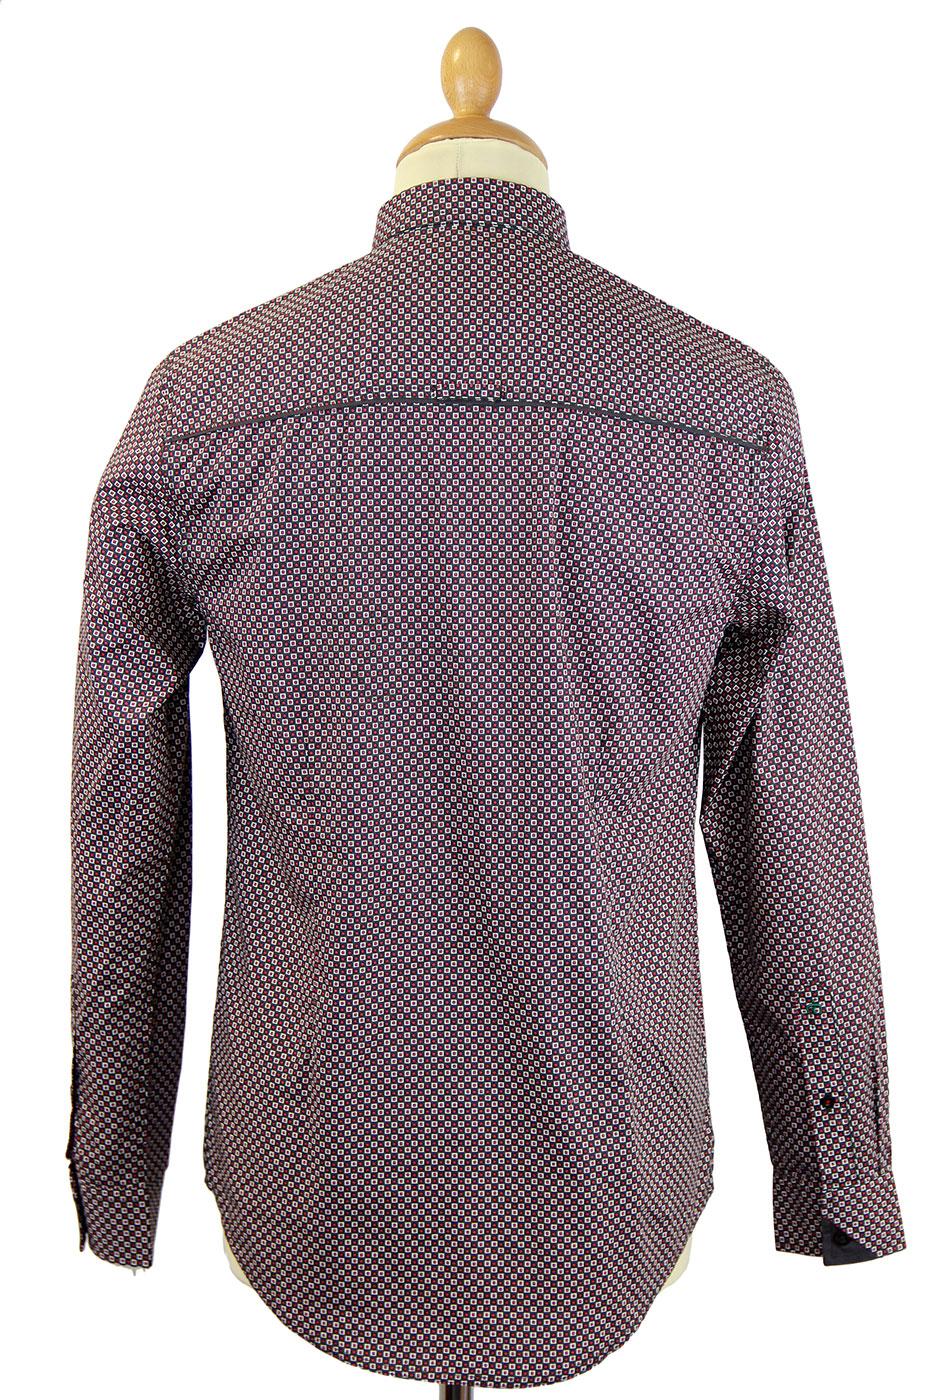 MERC Shane Retro 60s Geometric Square Mod Op Art Shirt Red